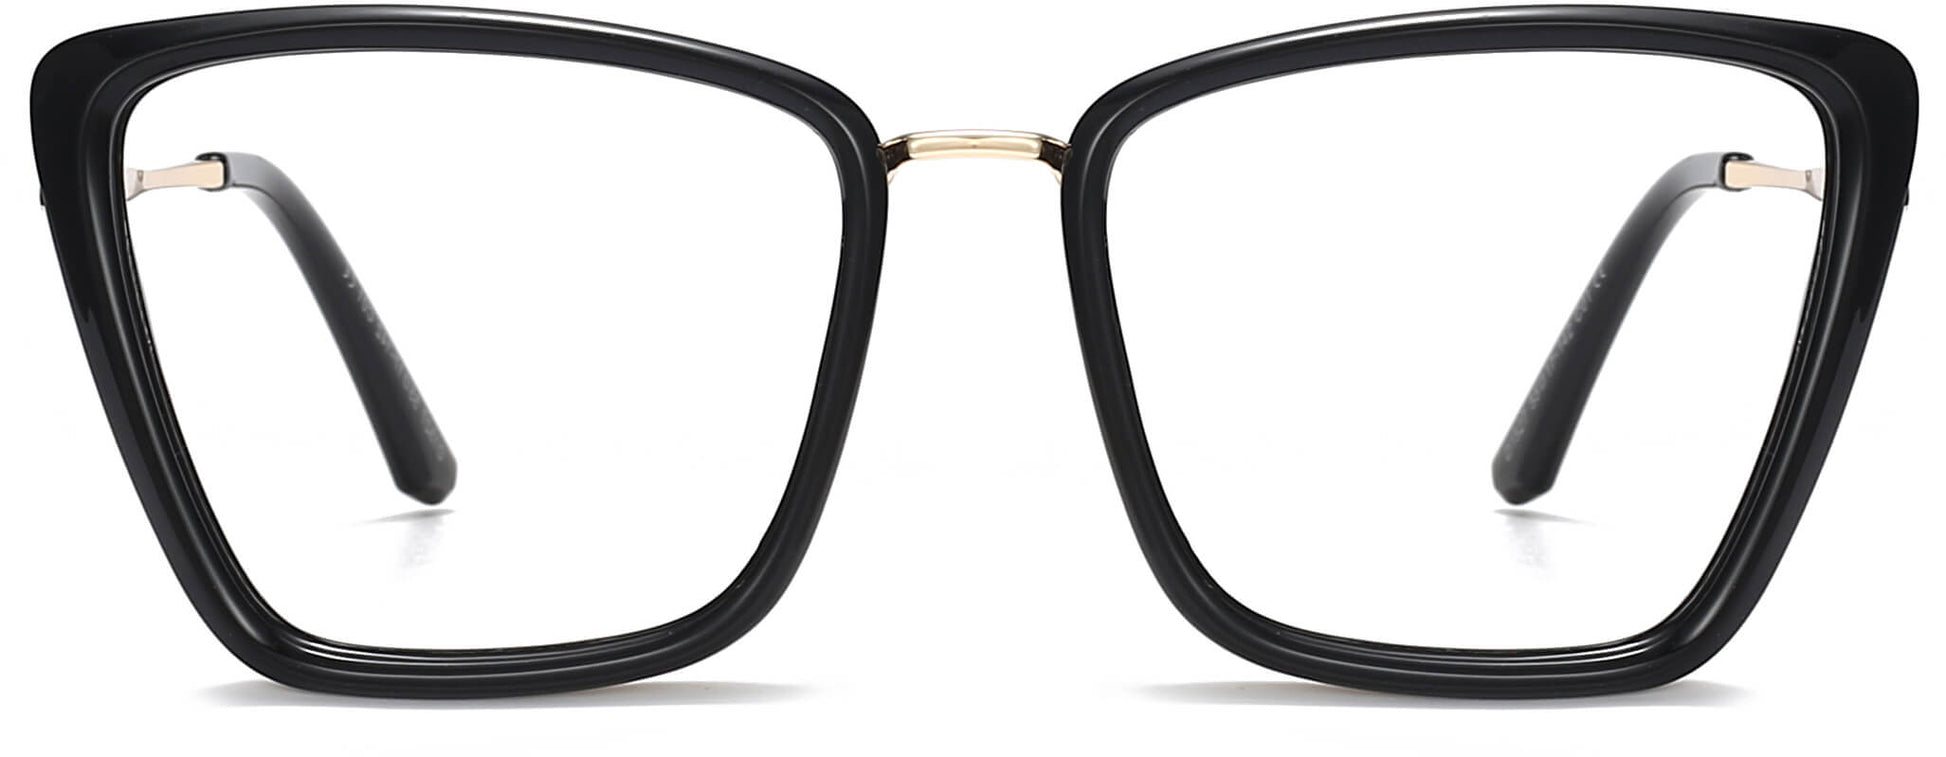 Noemi Cateye Black Eyeglasses from ANRRI, front view